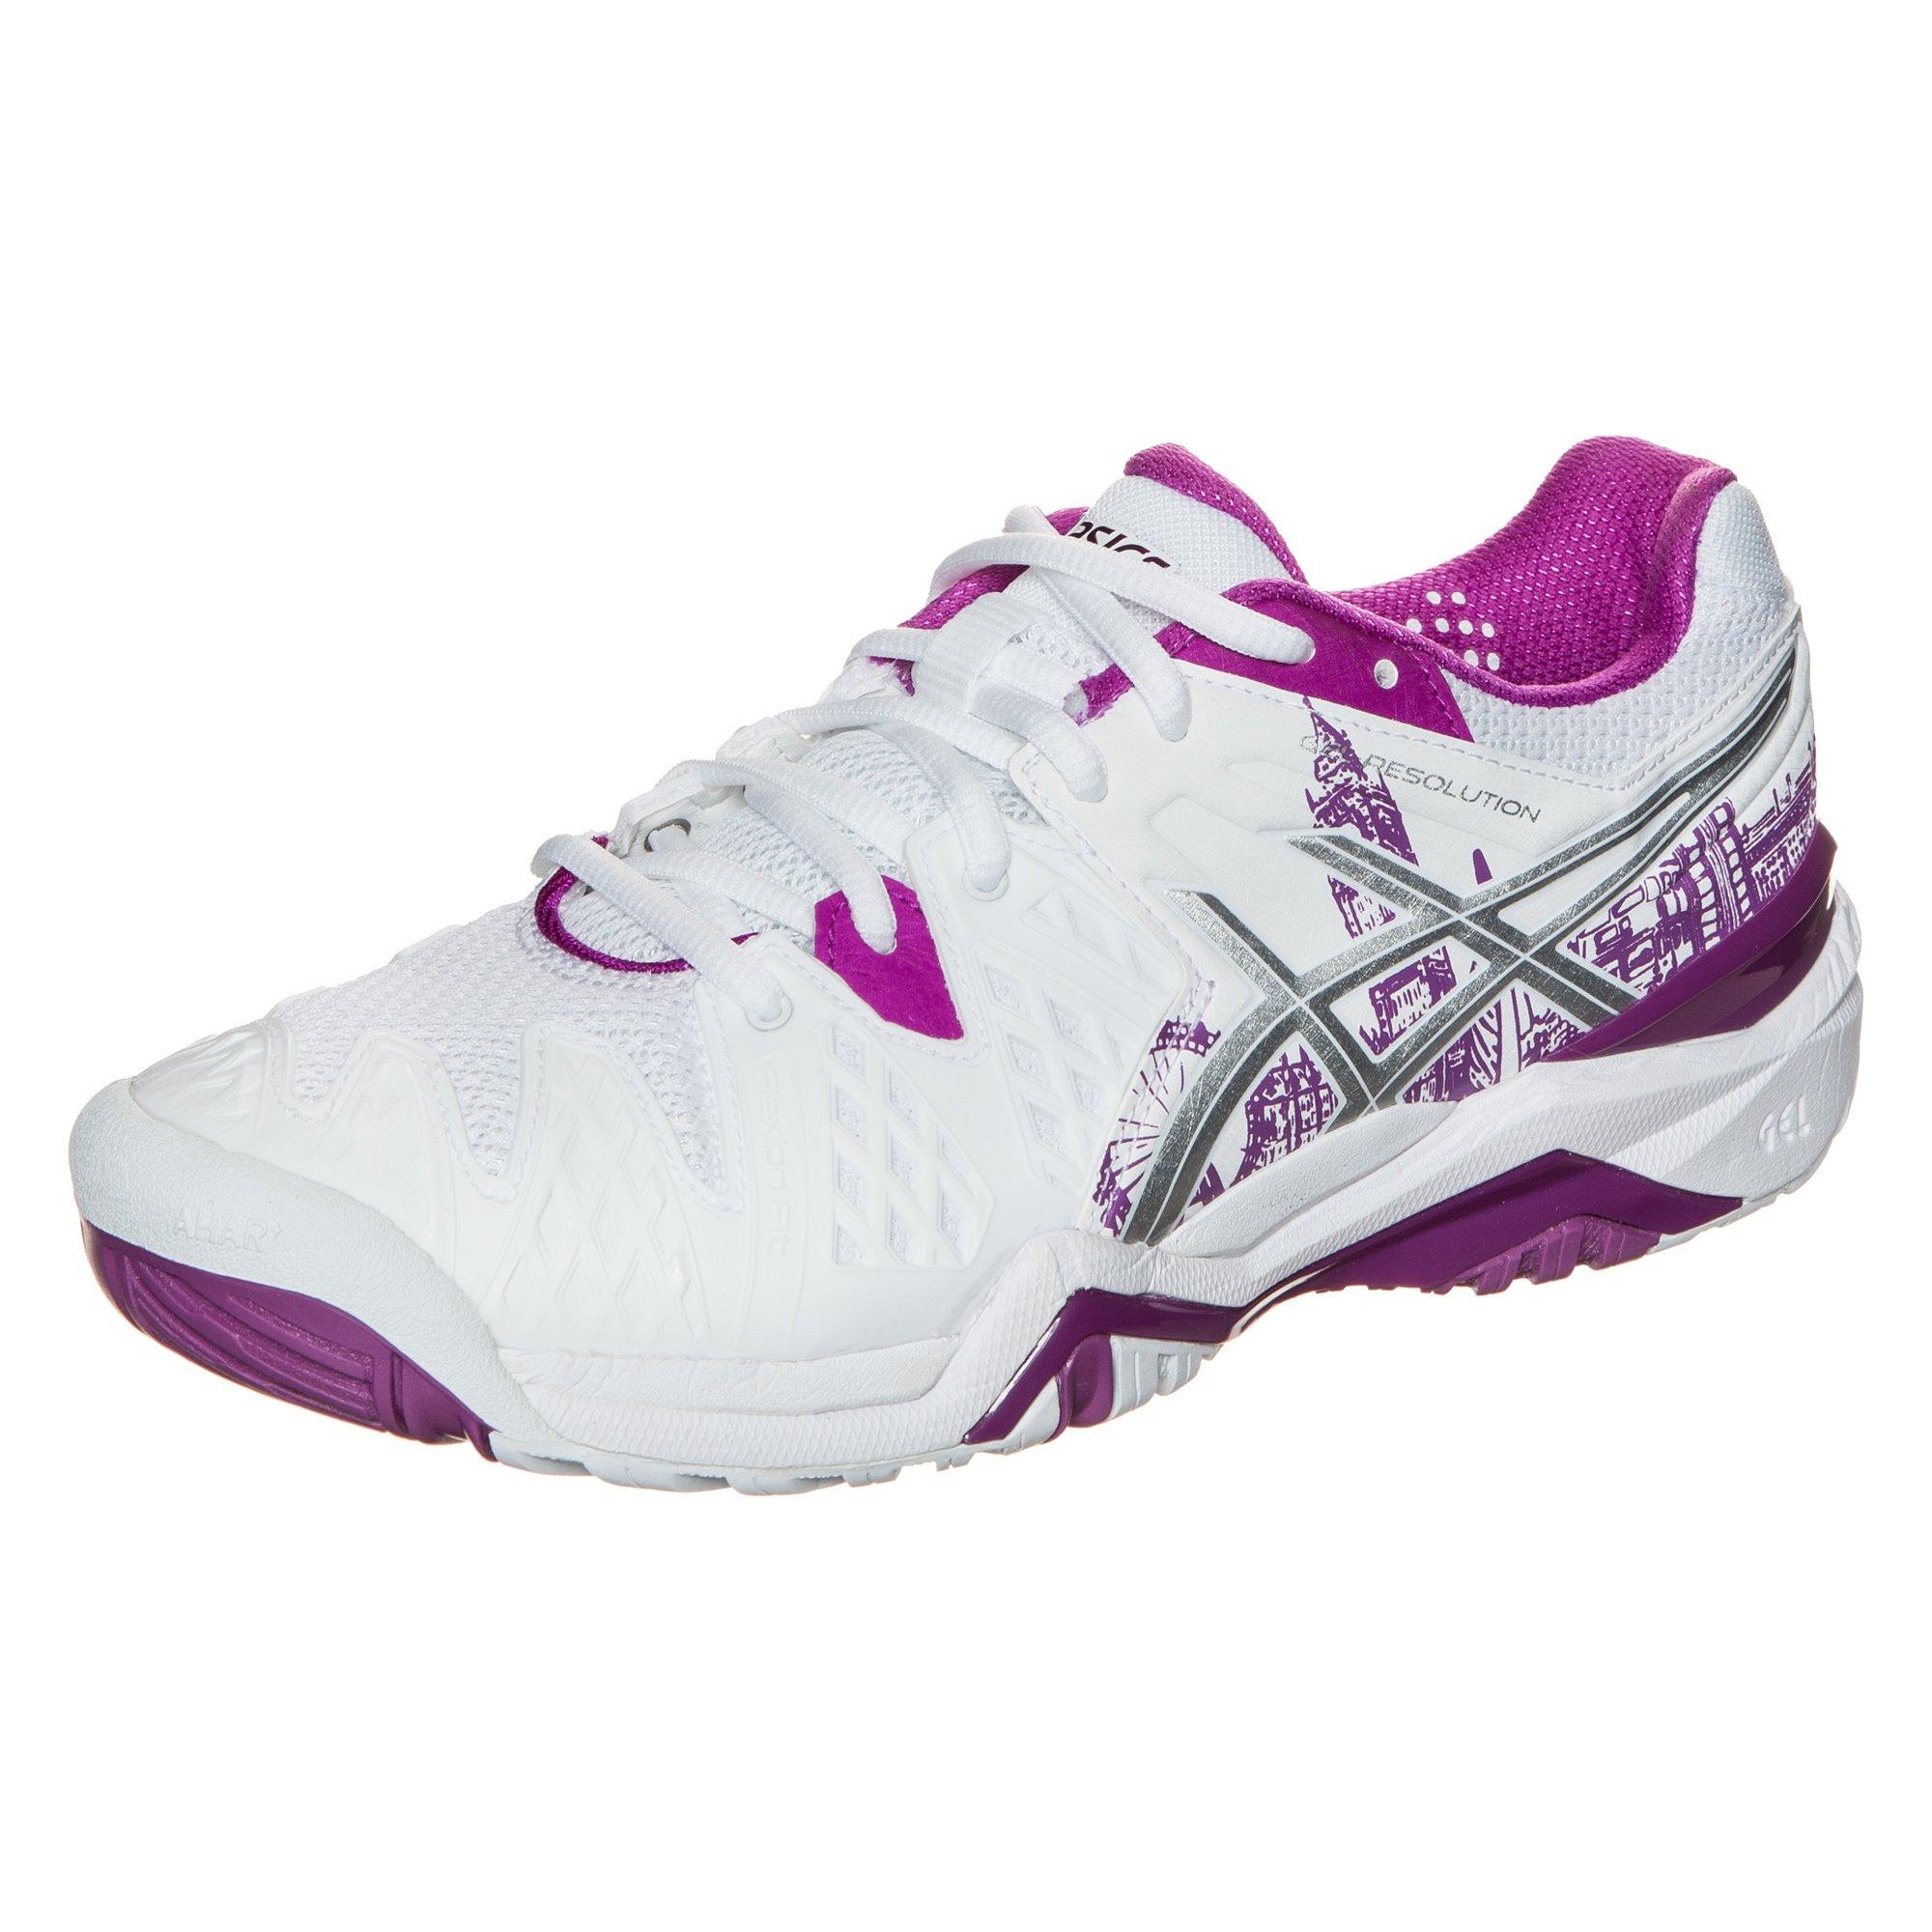 Asics Gel-resolution 6 Le London Ladies Tennis Shoes in Purple | Lyst UK